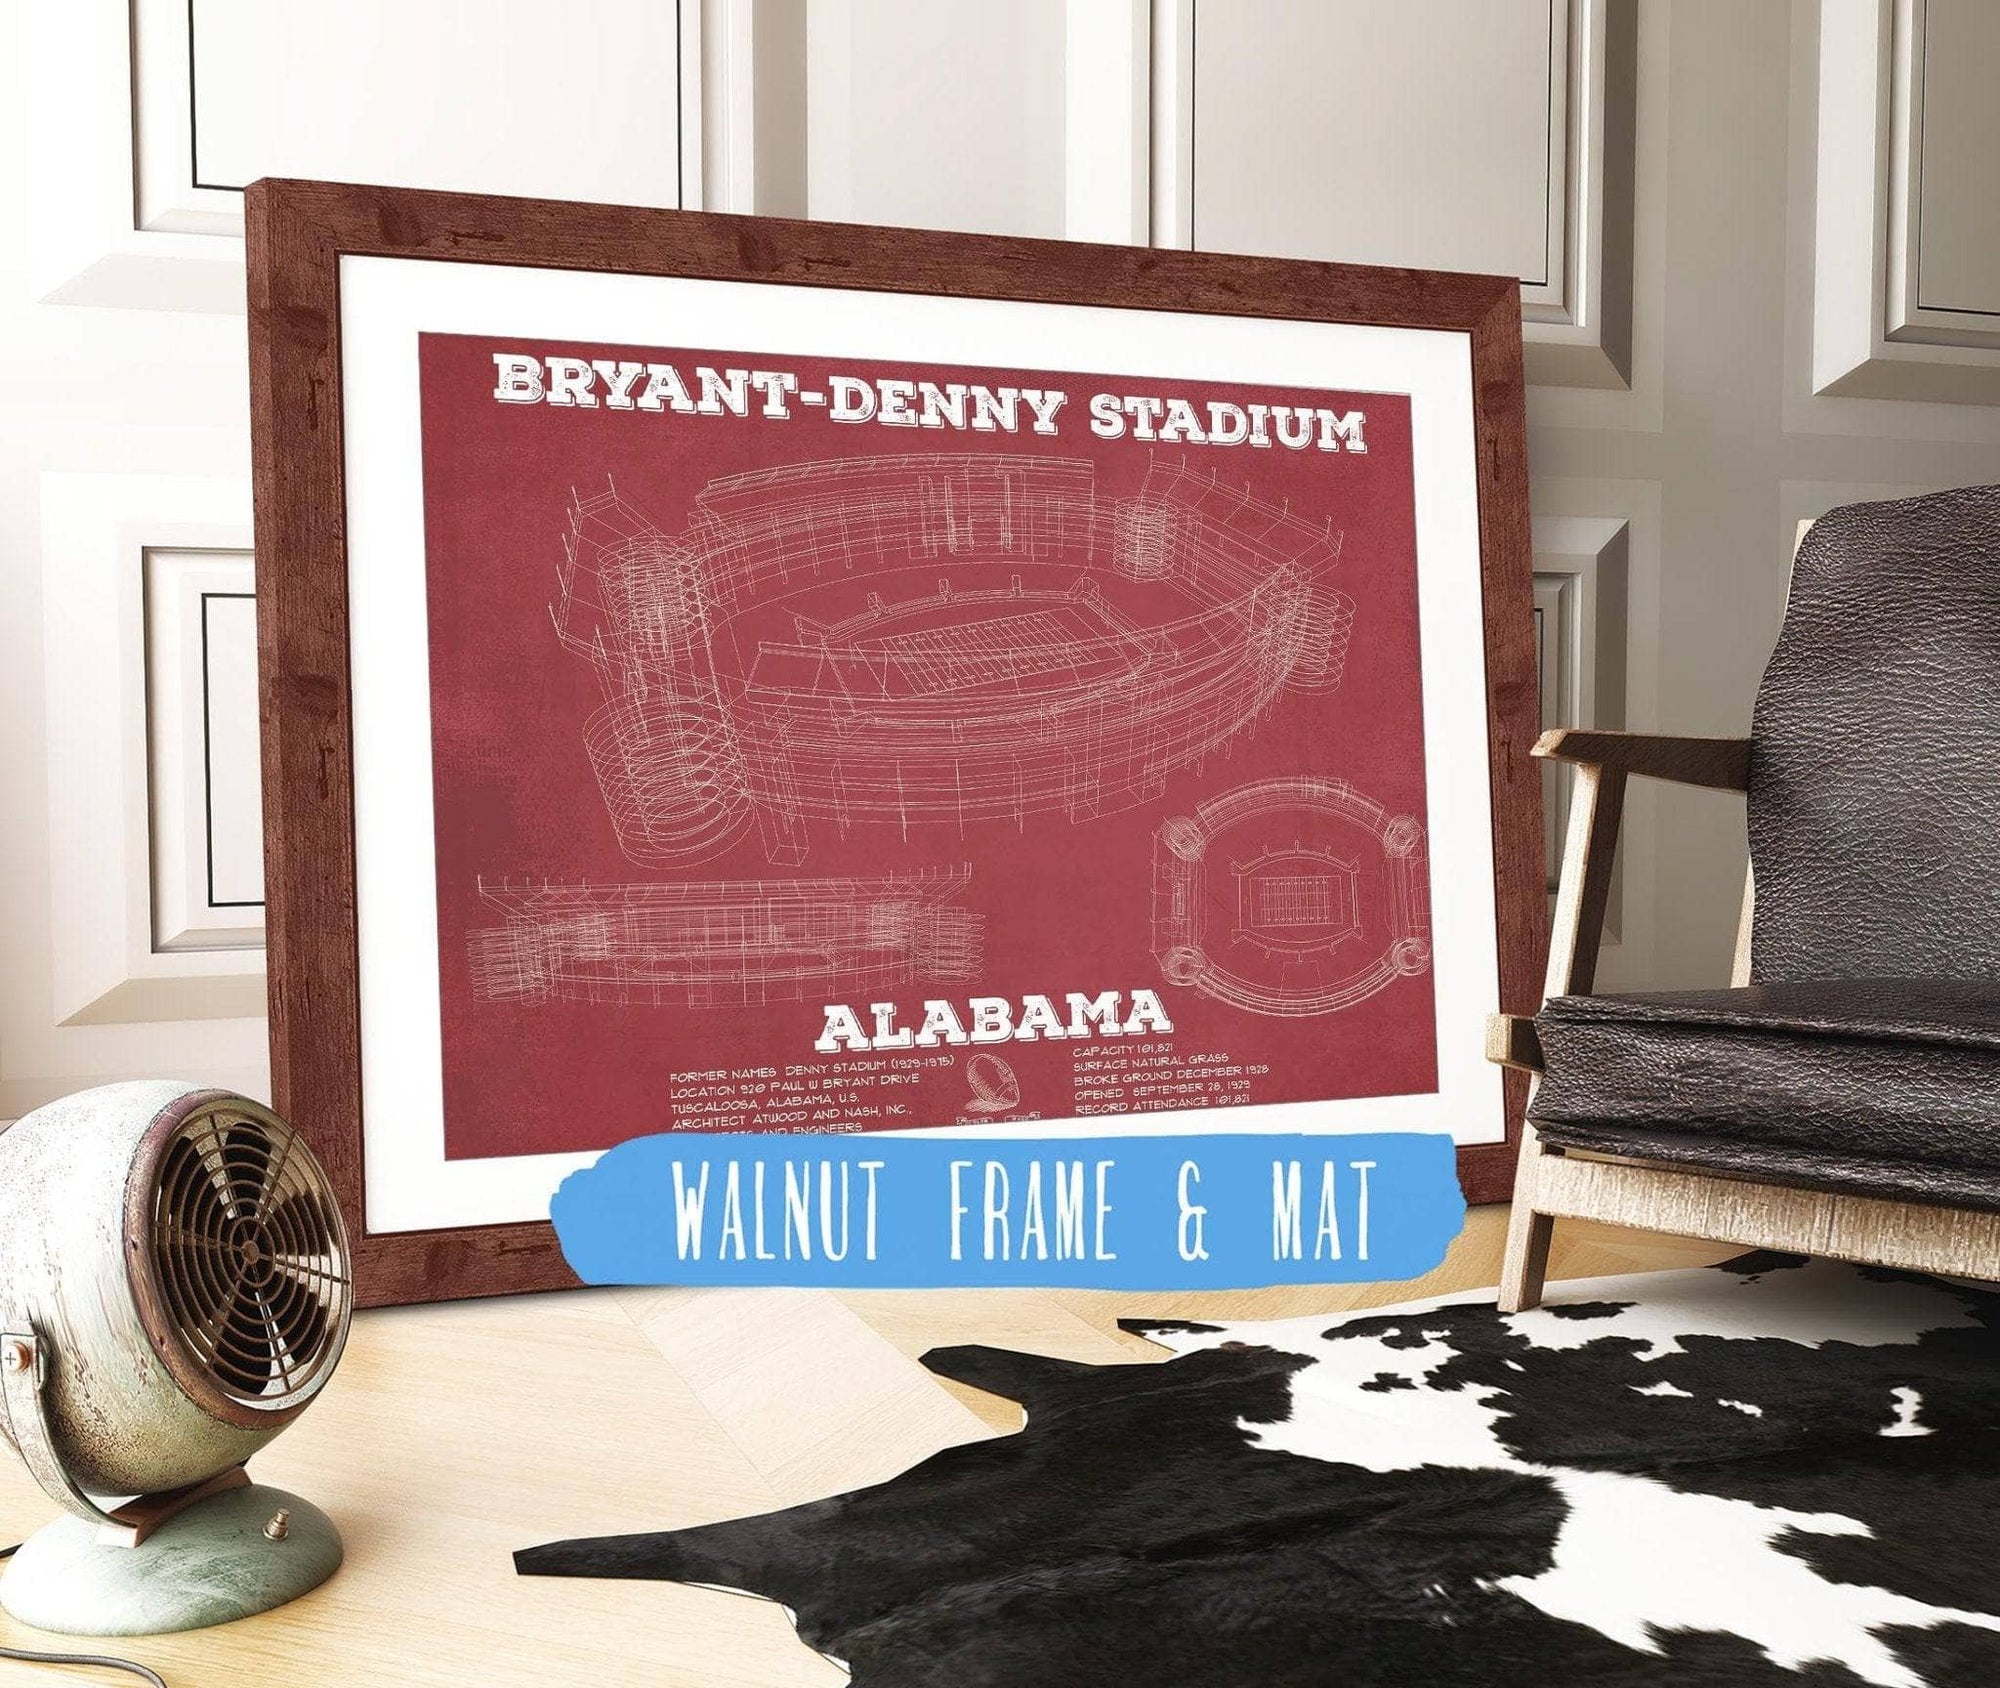 Cutler West College Football Collection 14" x 11" / Walnut Frame & Mat Alabama Crimson Tide Stadium Art - Bryant-Denny Stadium Vintage Seating Chart 635629844-TOP